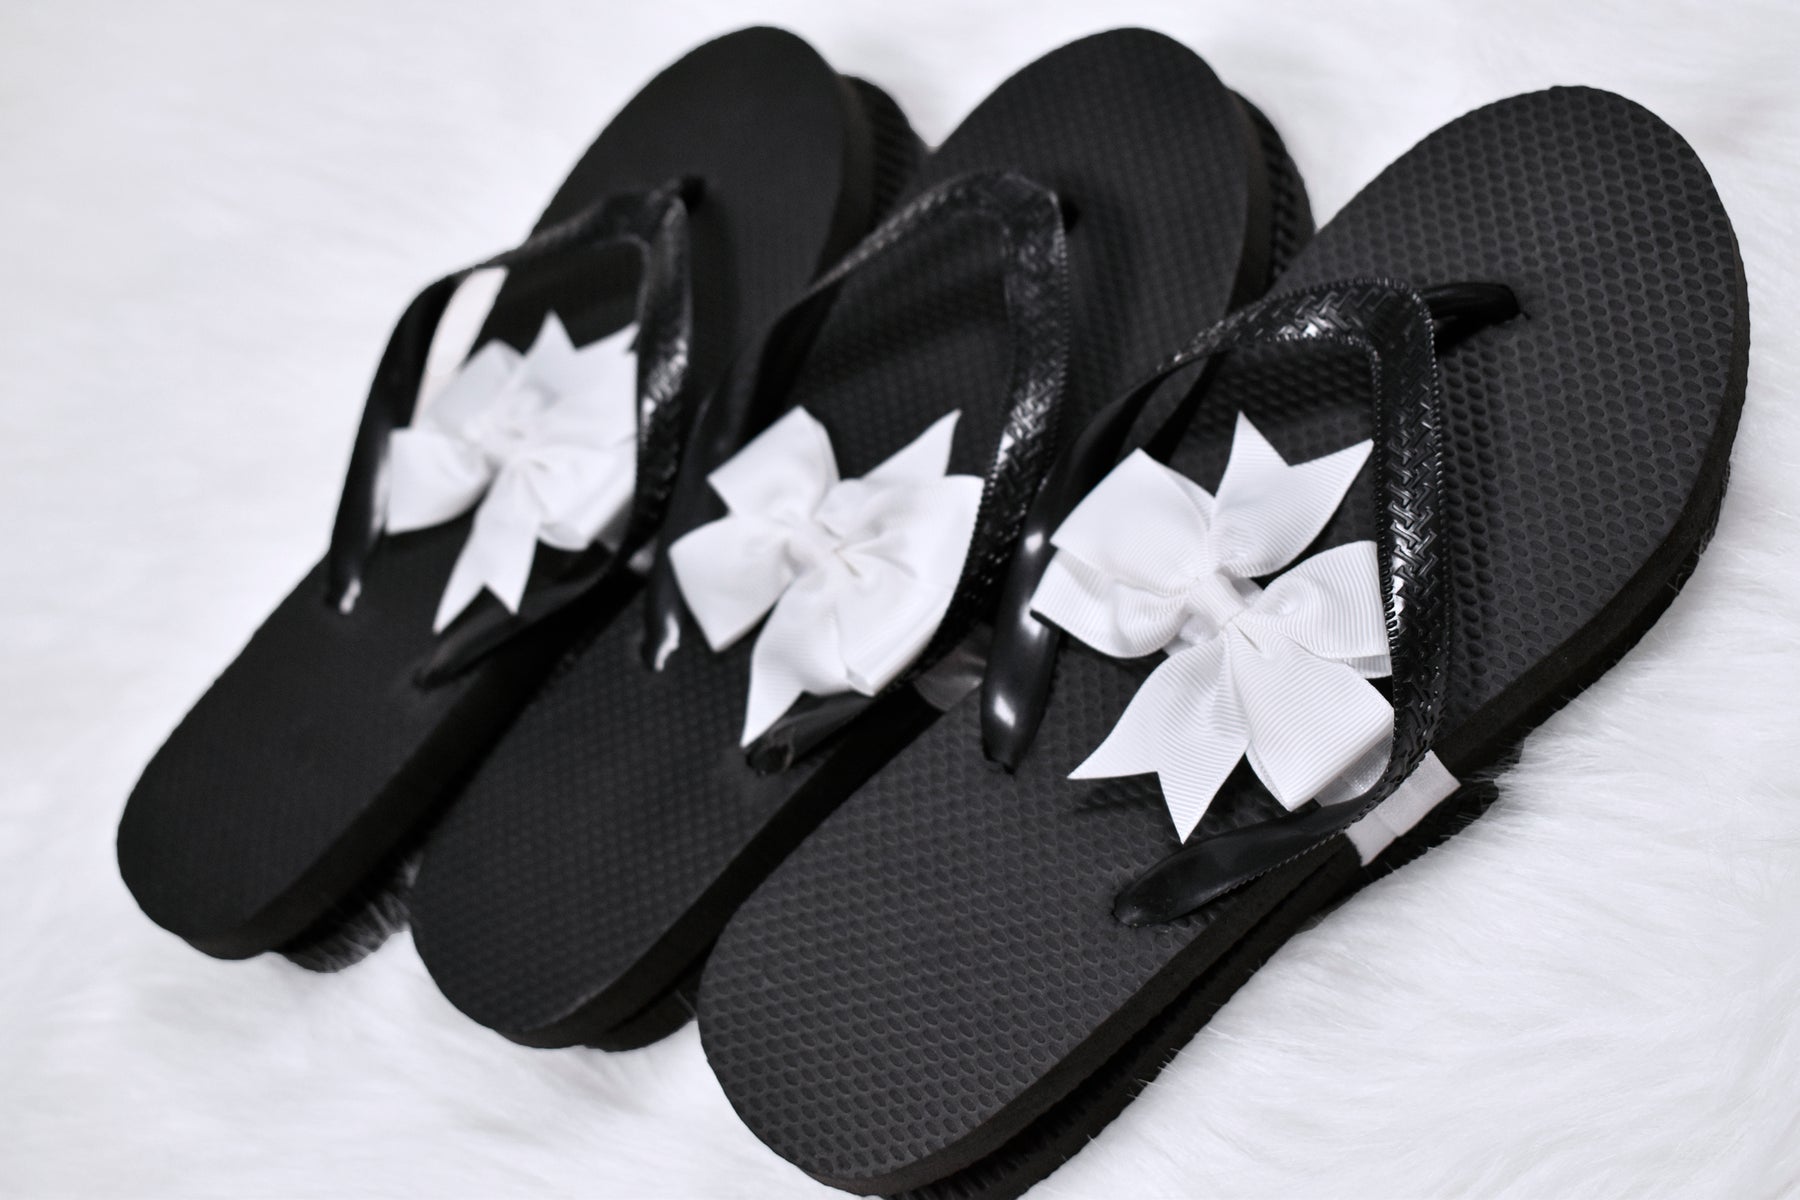  Suhine 48 Pairs Bulk Flip Flops, Black Assorted Size Flip Flops  for Guests Bulk Adult Flip Flops Slippers for Women Men Wedding Pool Party